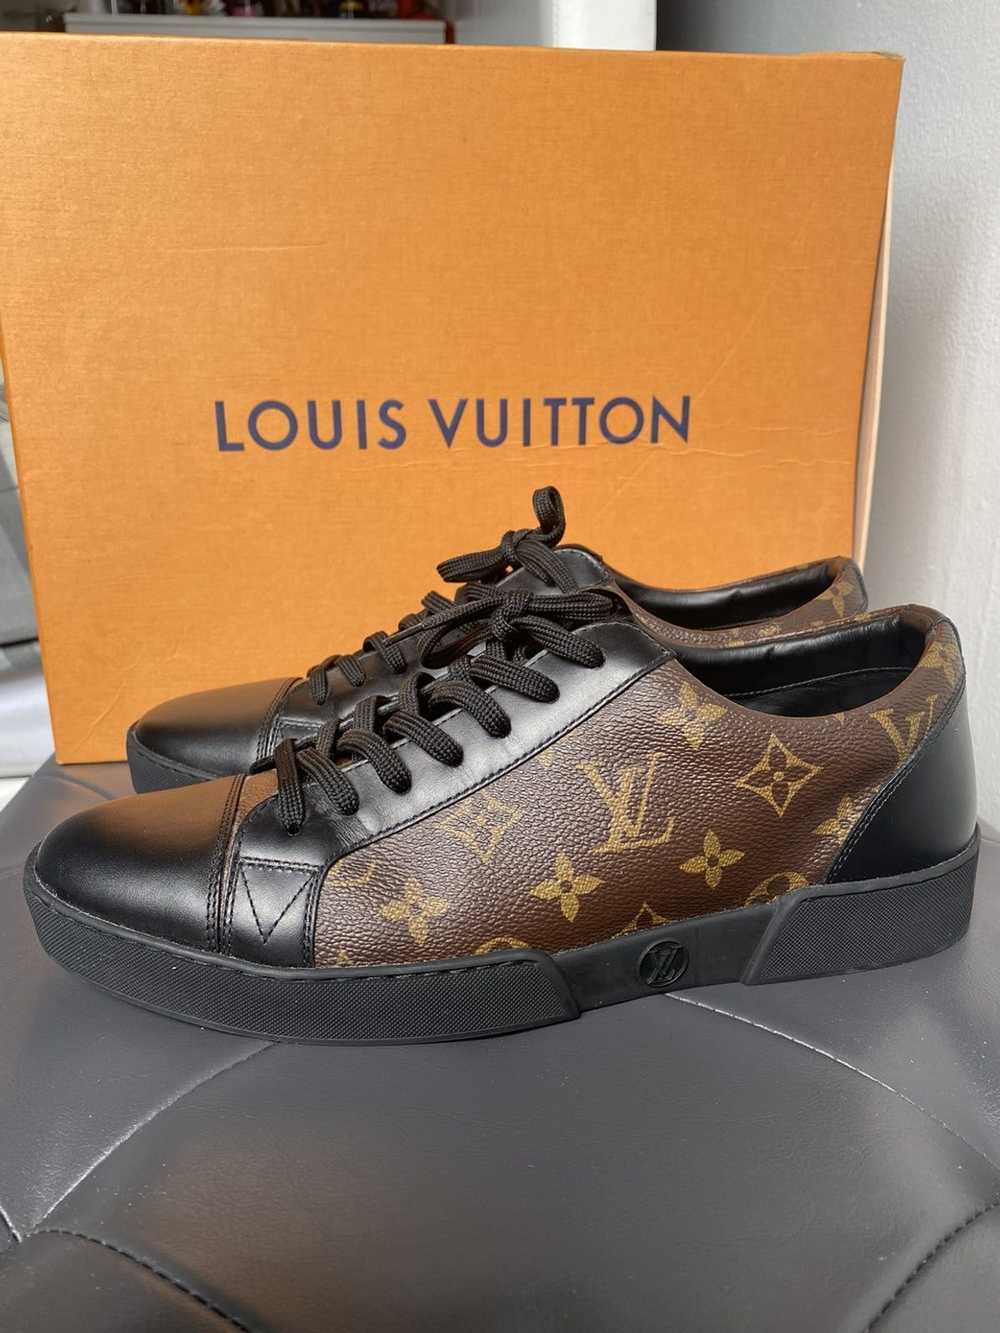 Size 8.5US/7.5LV Louis Vuitton Runner Tatic Trainer Shoe $1340 Retail  Authentic